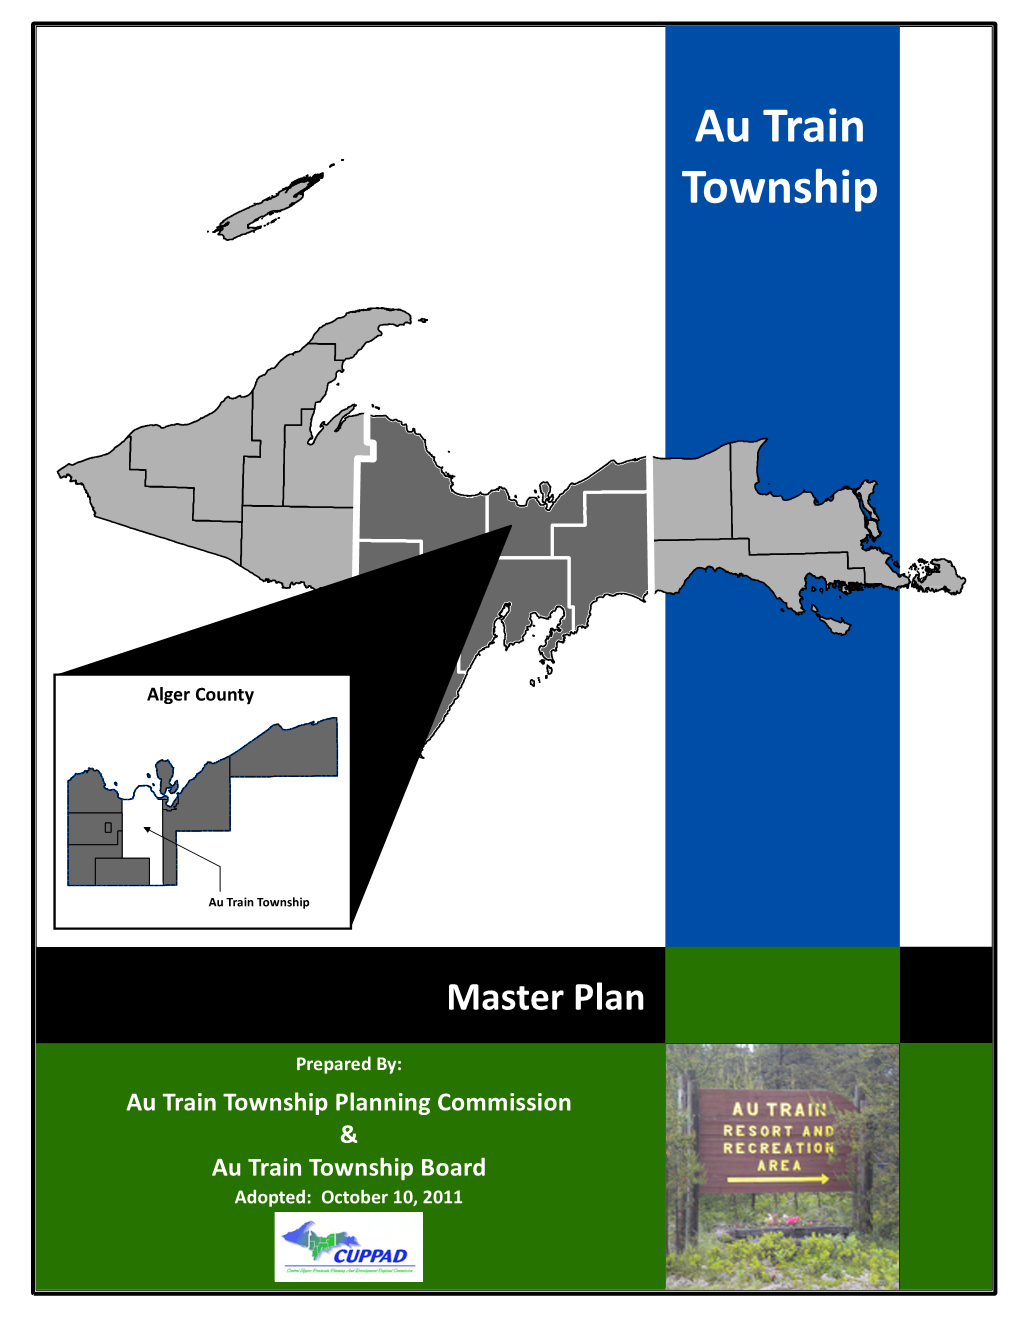 Au Train Township Master Plan